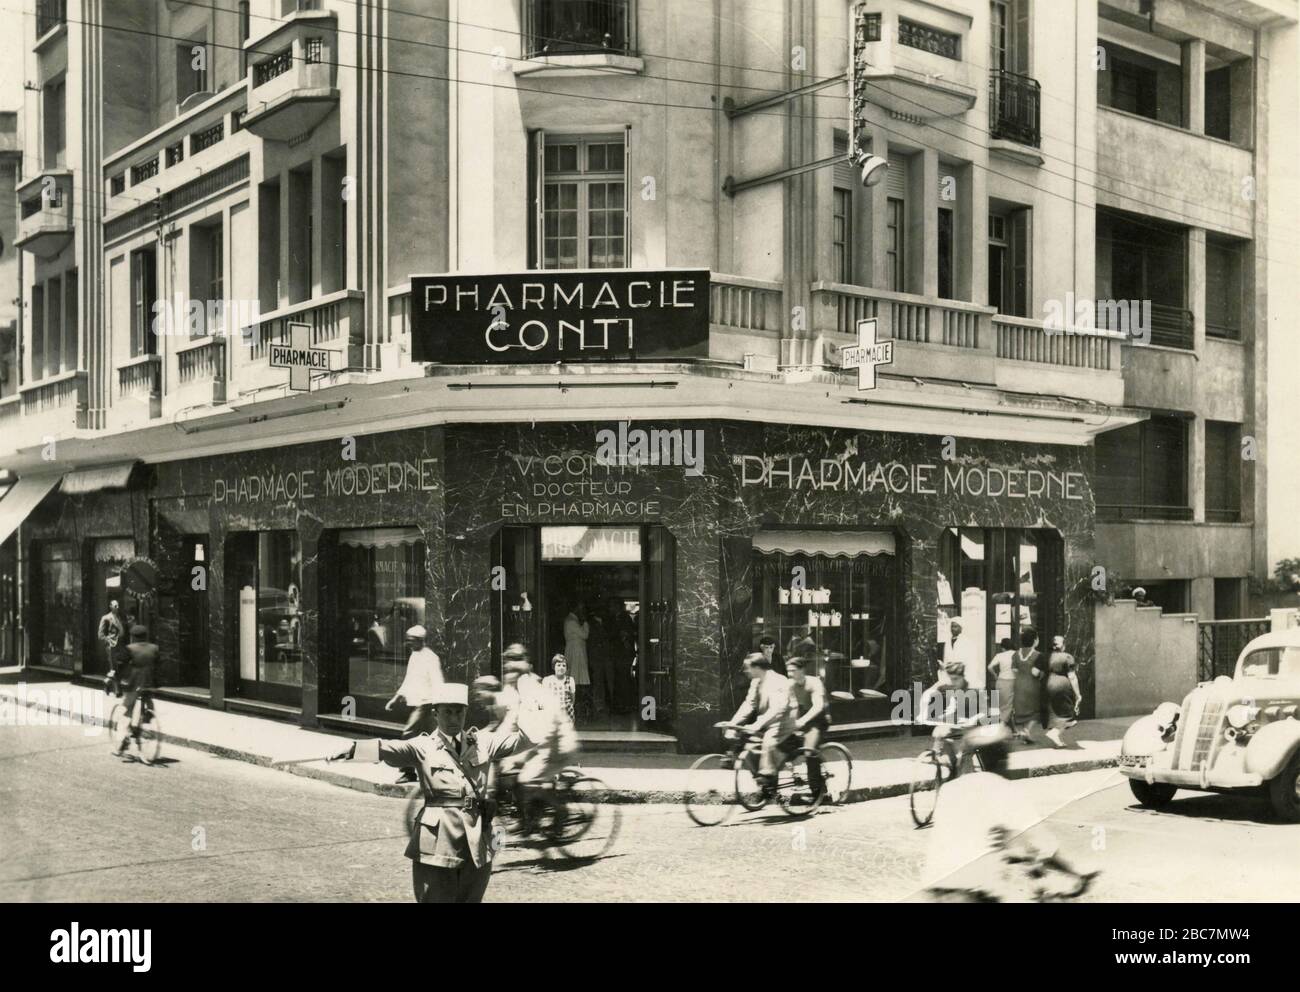 Pharmacie Conti at the corner, Casablanca, Morocco 1930s Stock Photo